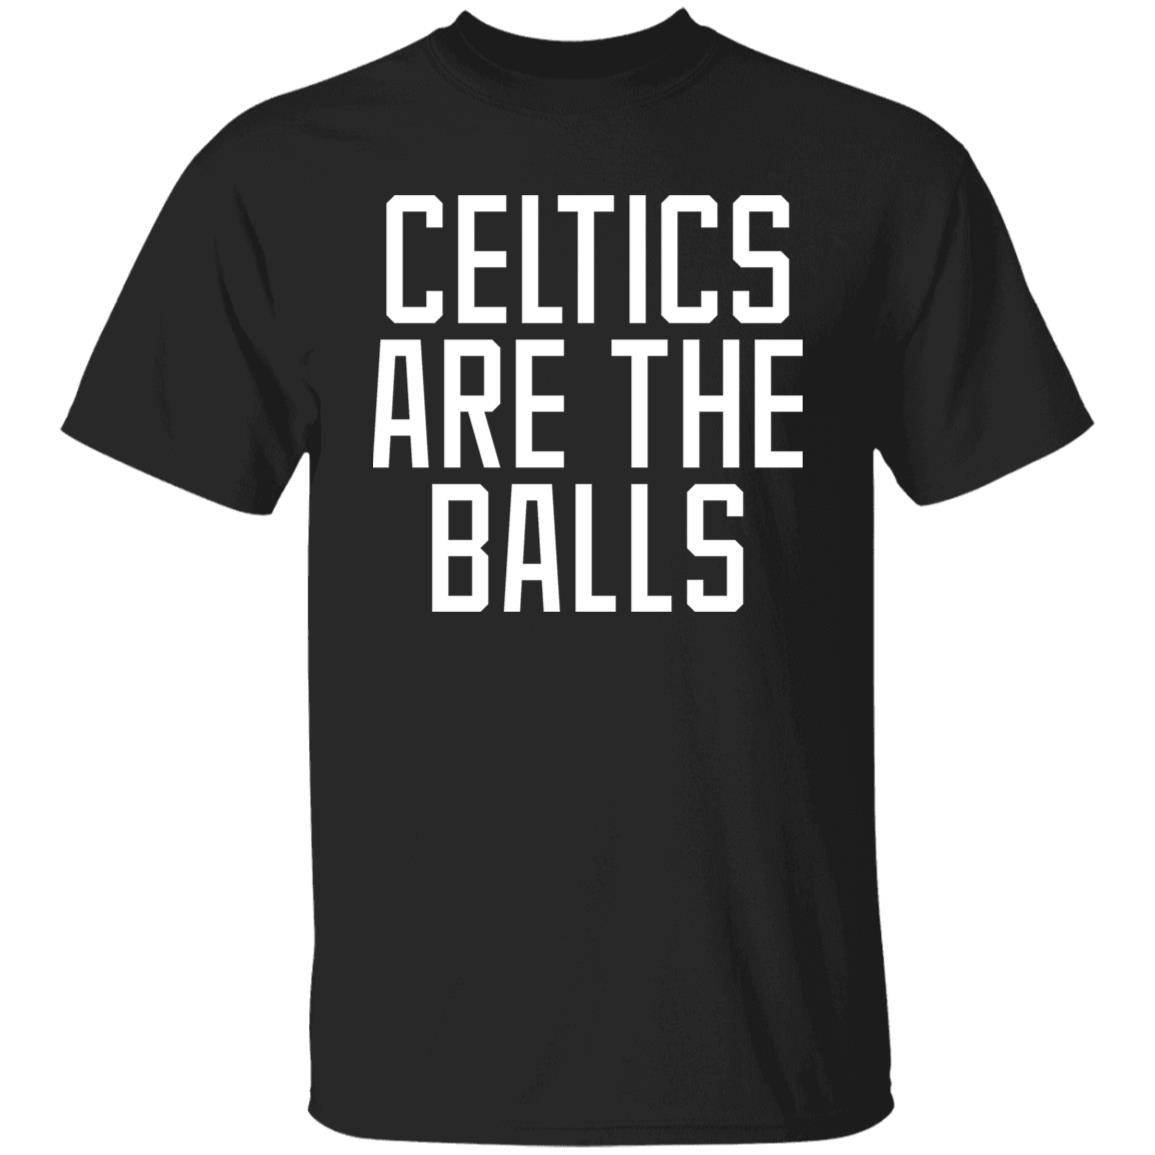 Barstool Sports Store Dave Portnoy Celtics Are The Balls Shirt Pardon My Take The Balls Shirt